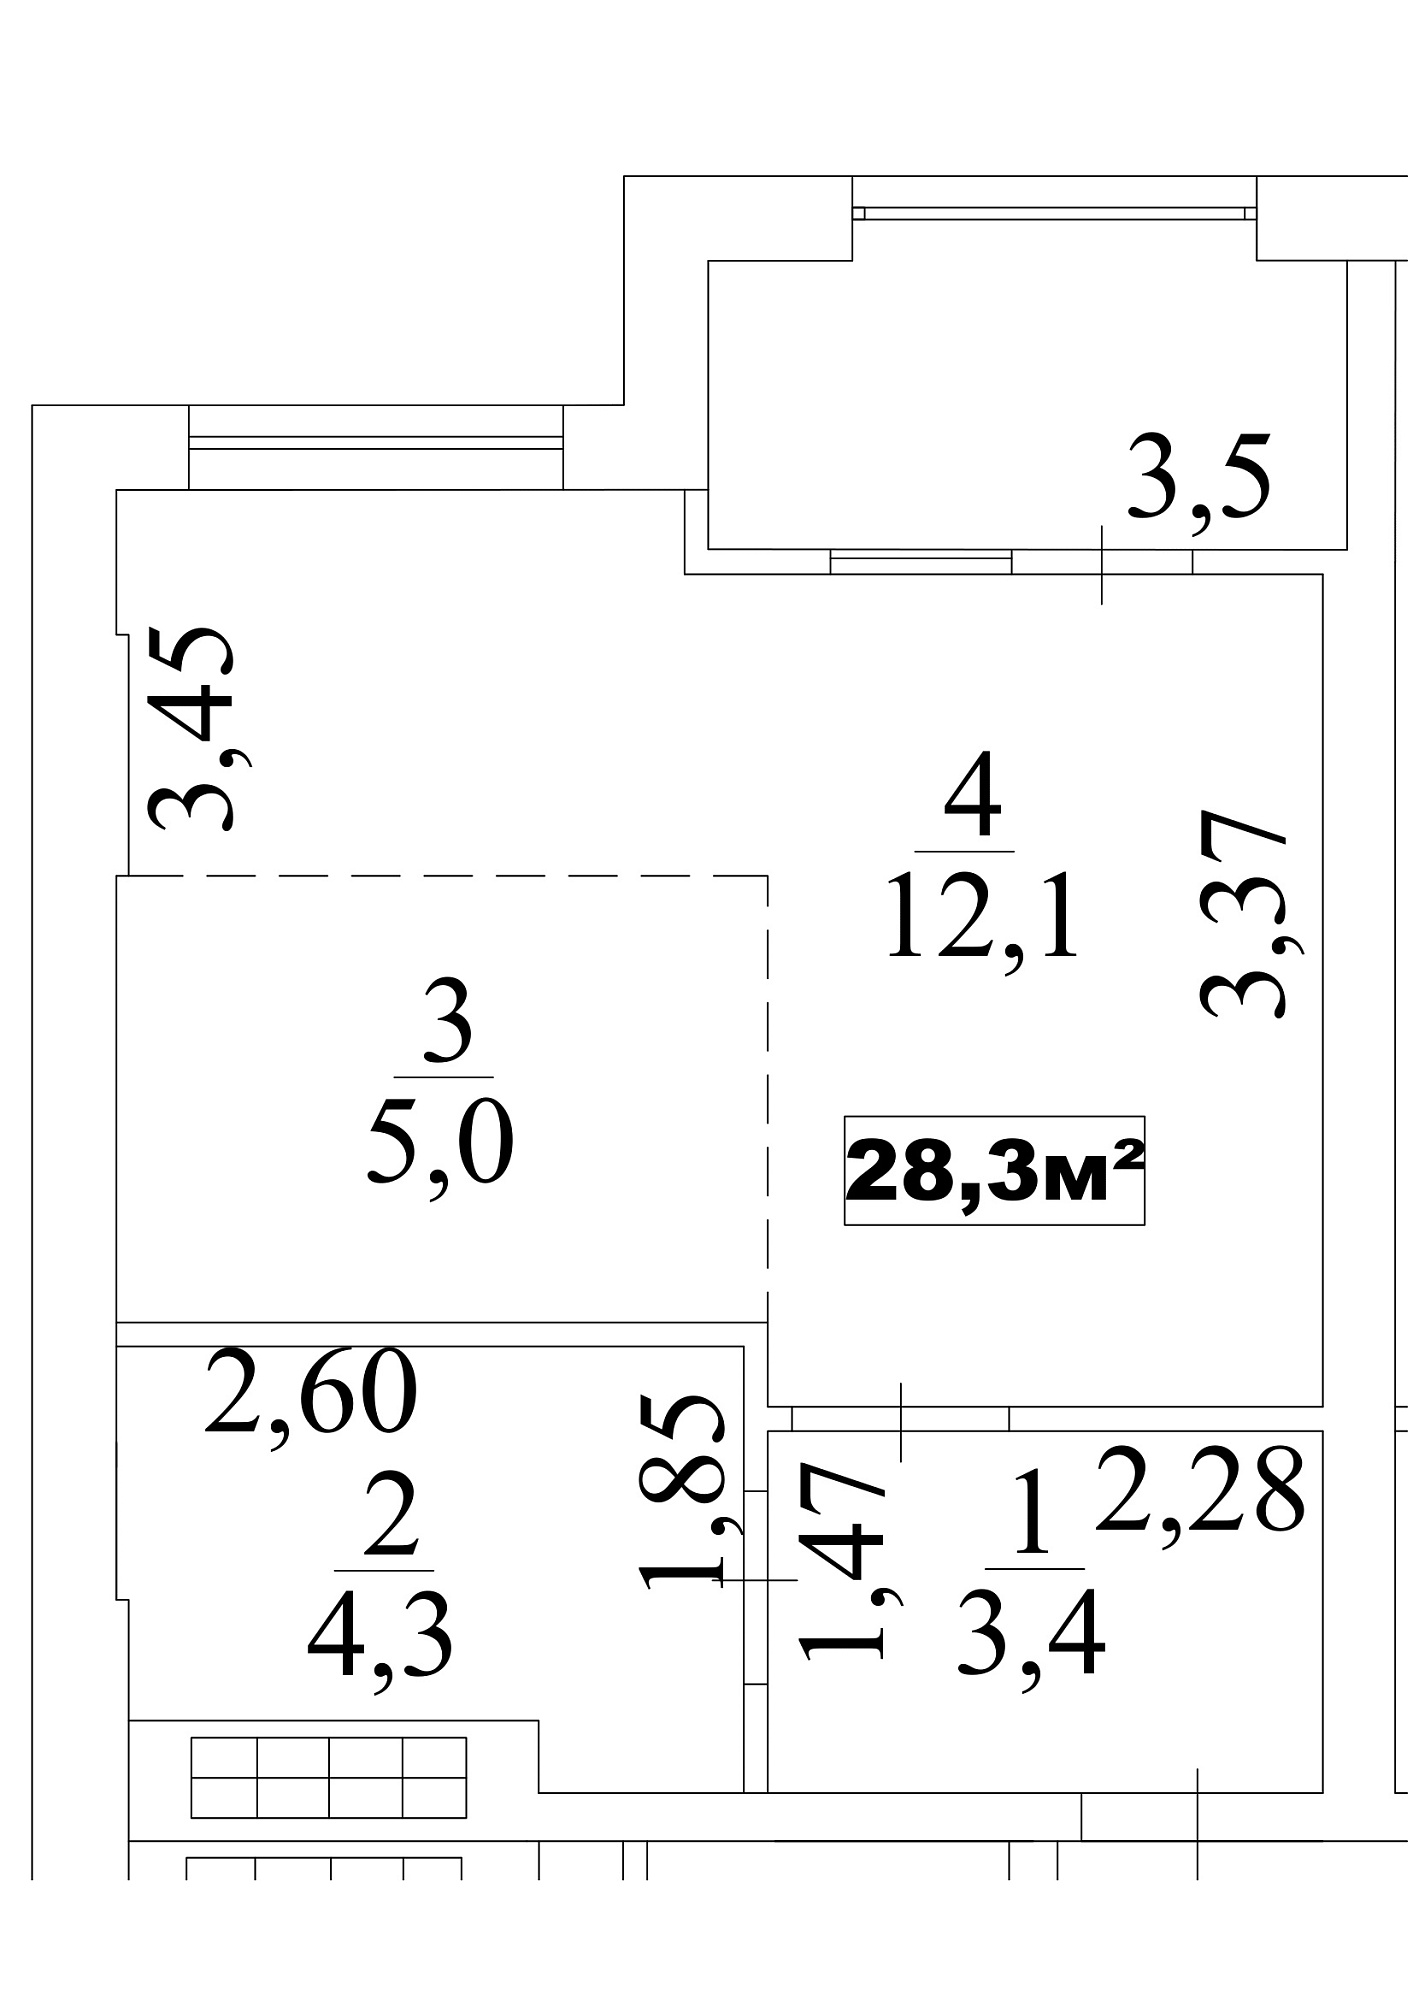 Planning Smart flats area 28.3m2, AB-10-08/0066б.